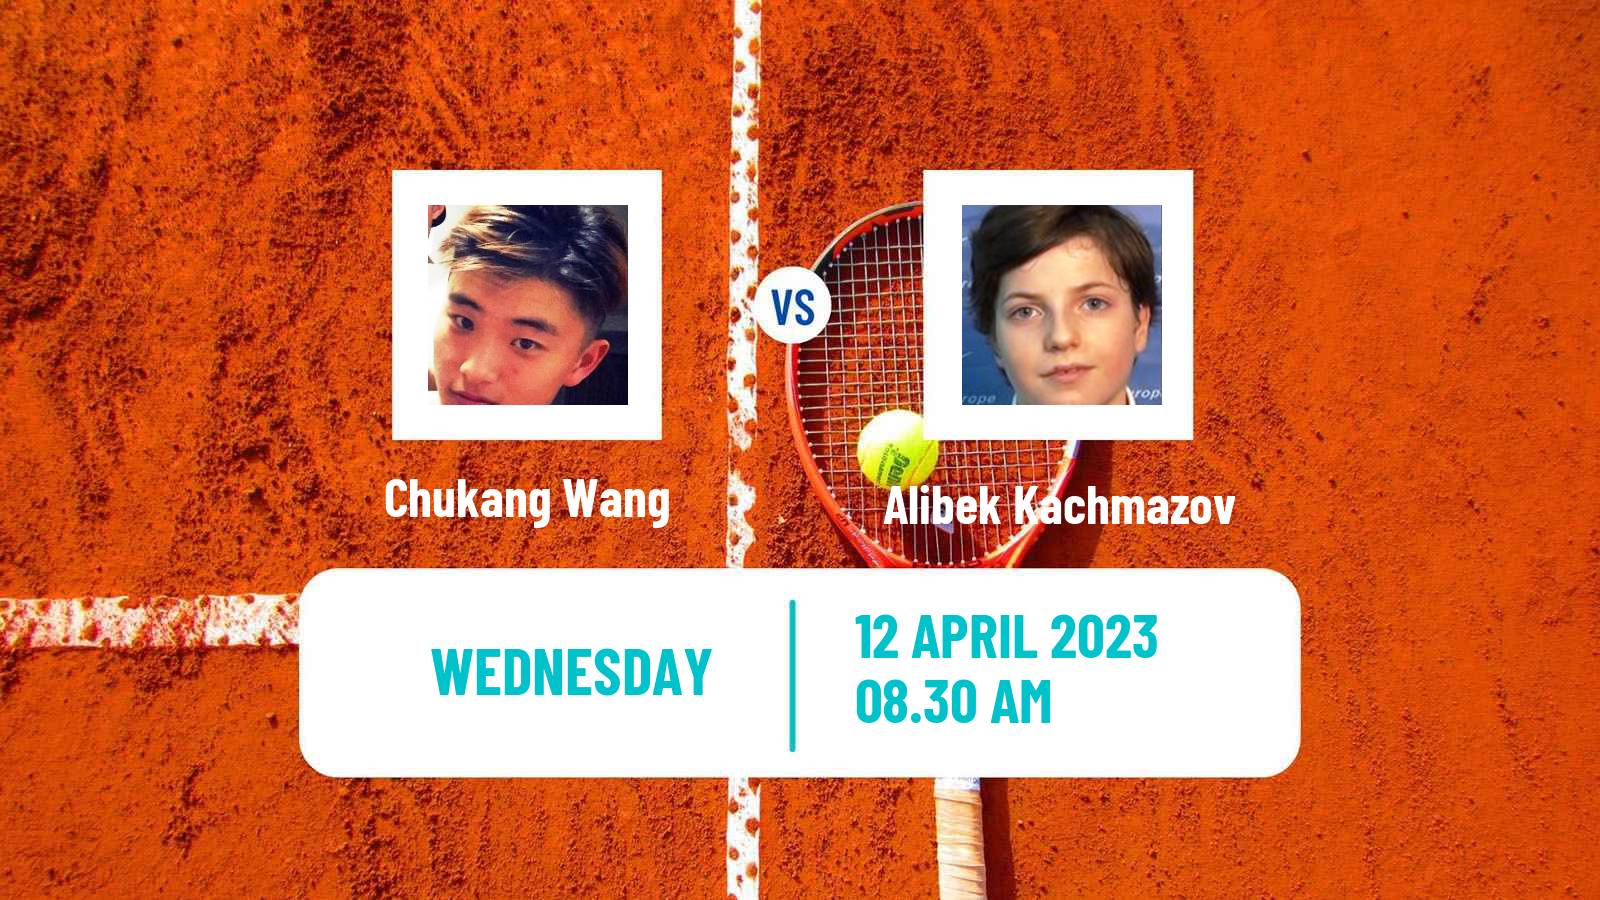 Tennis ITF Tournaments Chukang Wang - Alibek Kachmazov